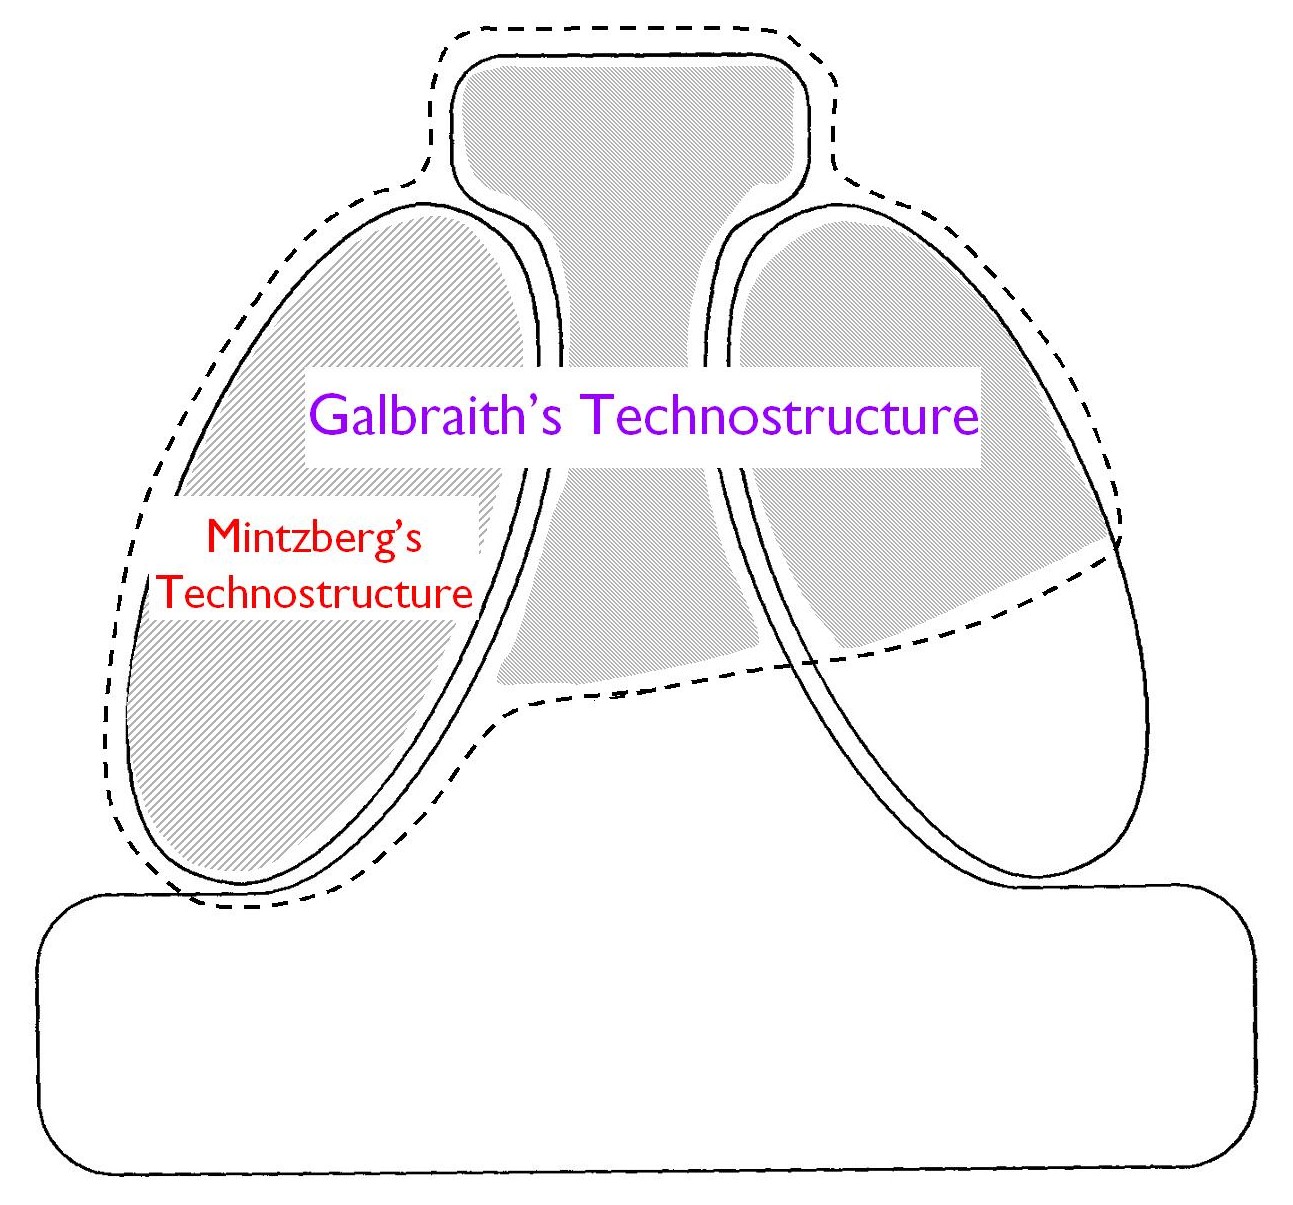 Figure 3: Galbraith's approach shown in Mintzberg's scheme